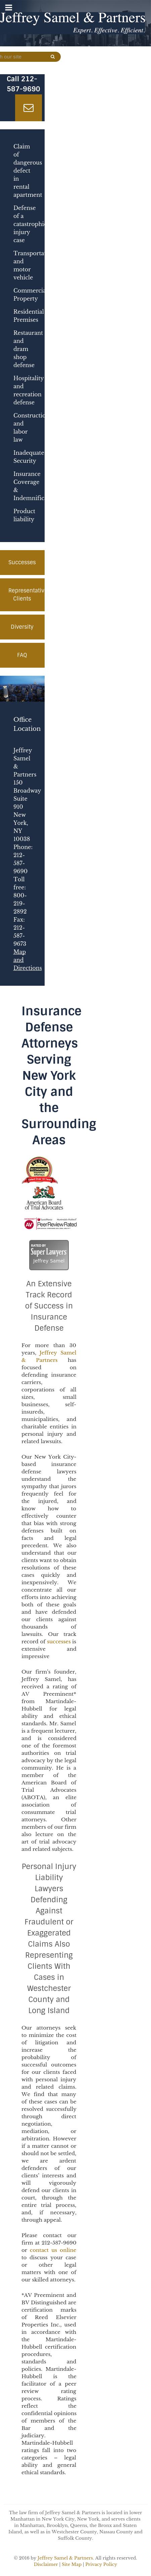 Jeffrey Samel & Partners - New York NY Lawyers